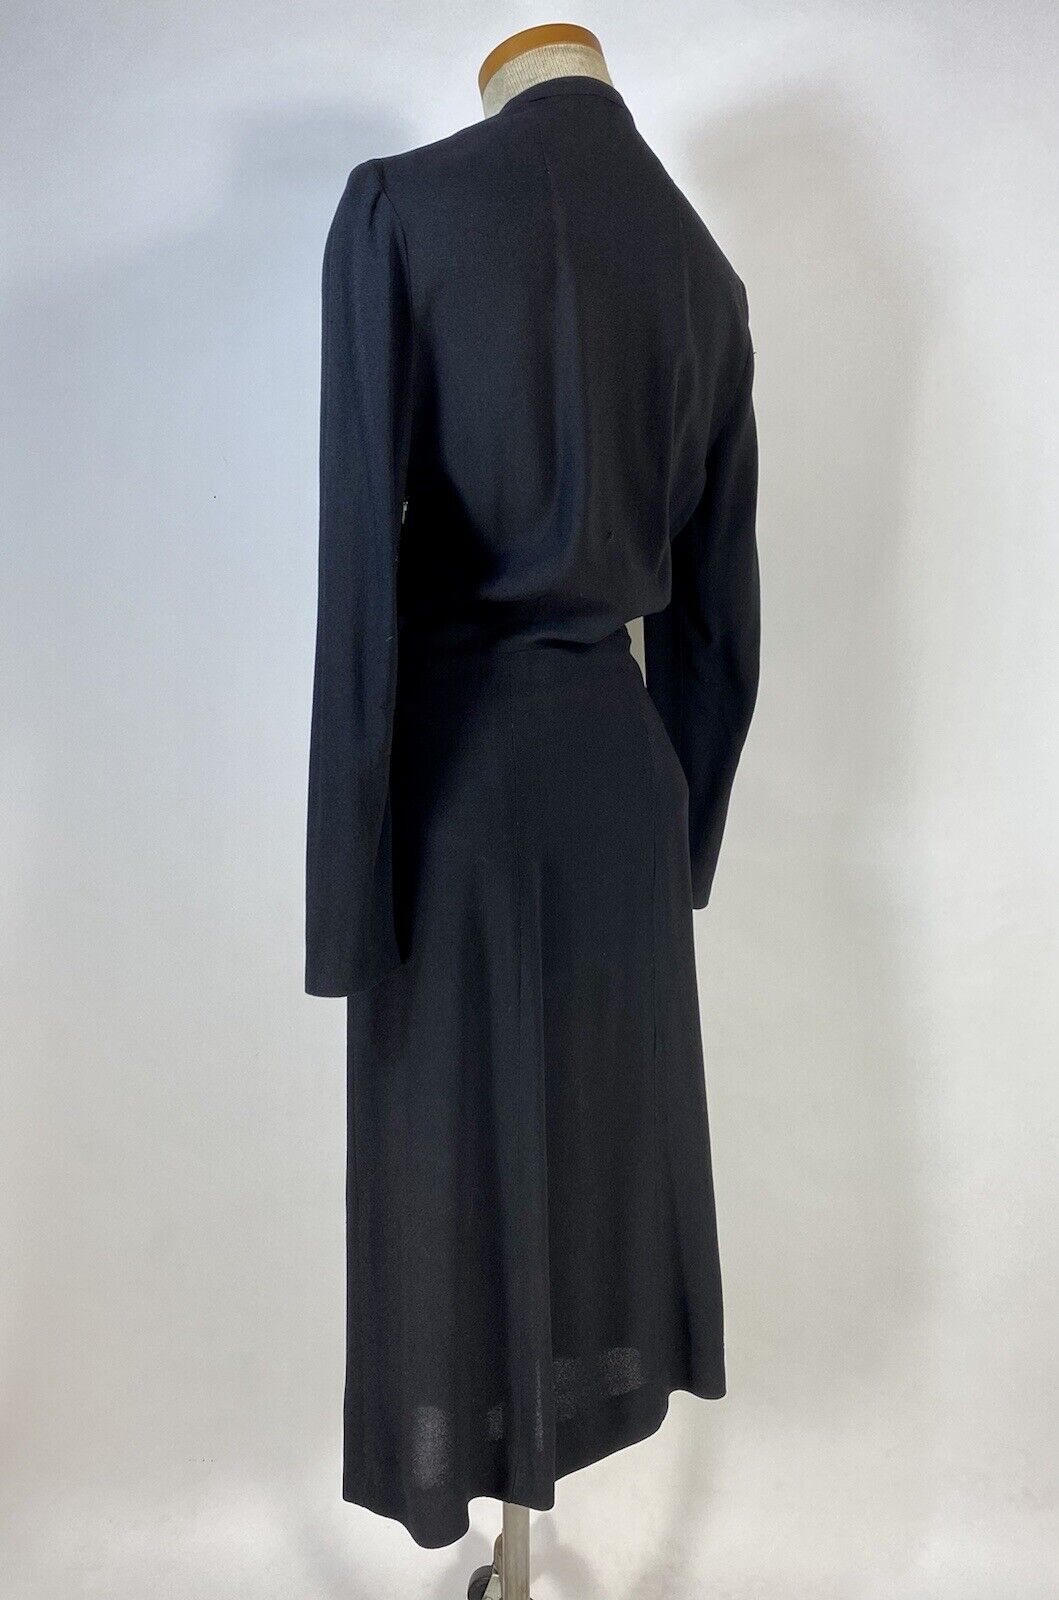 Vintage 1940's black wool crepe dress with neckli… - image 4